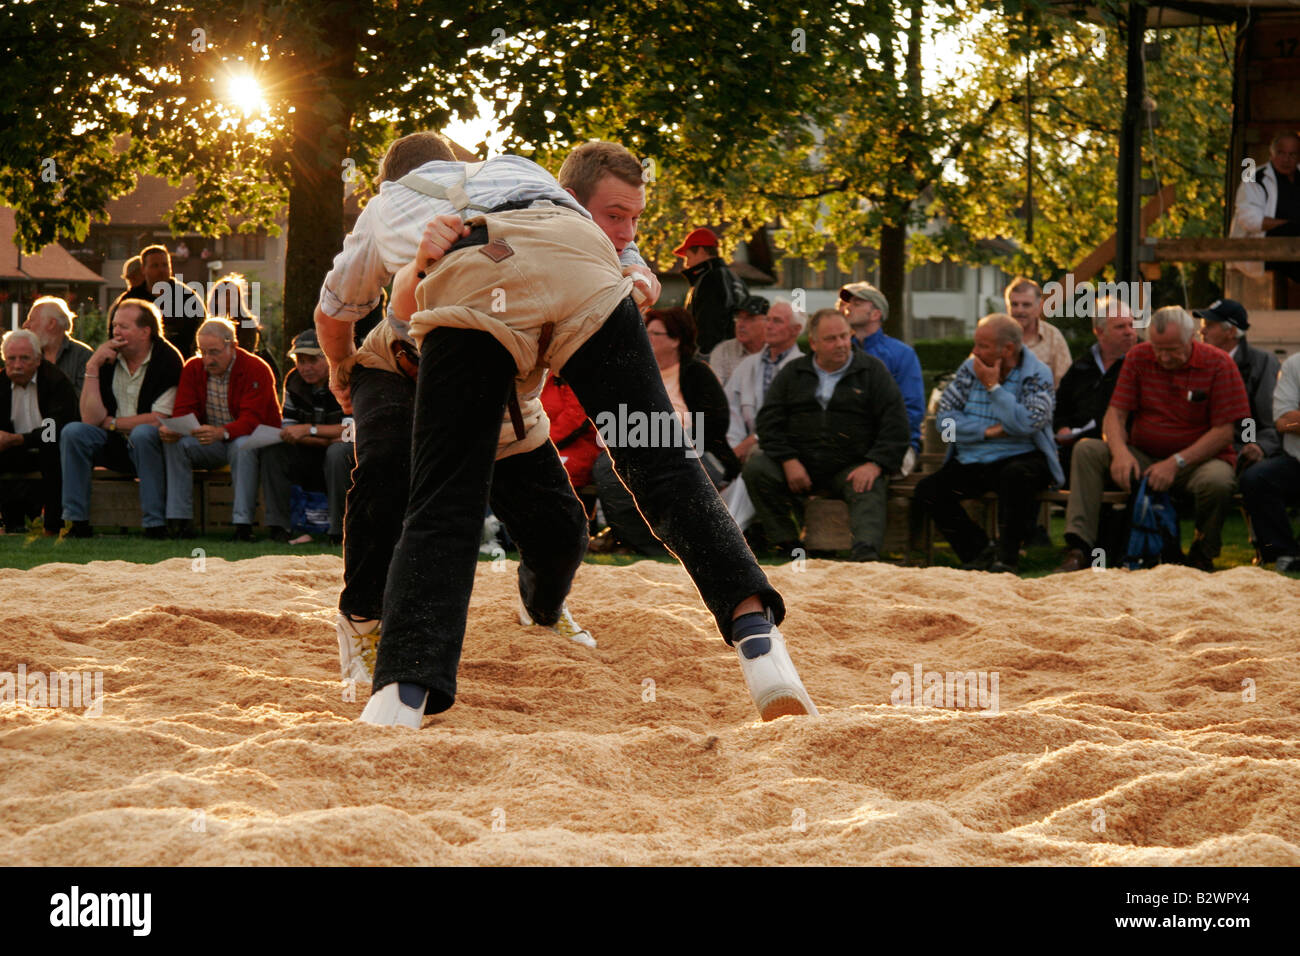 Schwingen contest, a Swiss variant of folk wrestling and national sport, in a rural area near Zurich, Switzerland Stock Photo